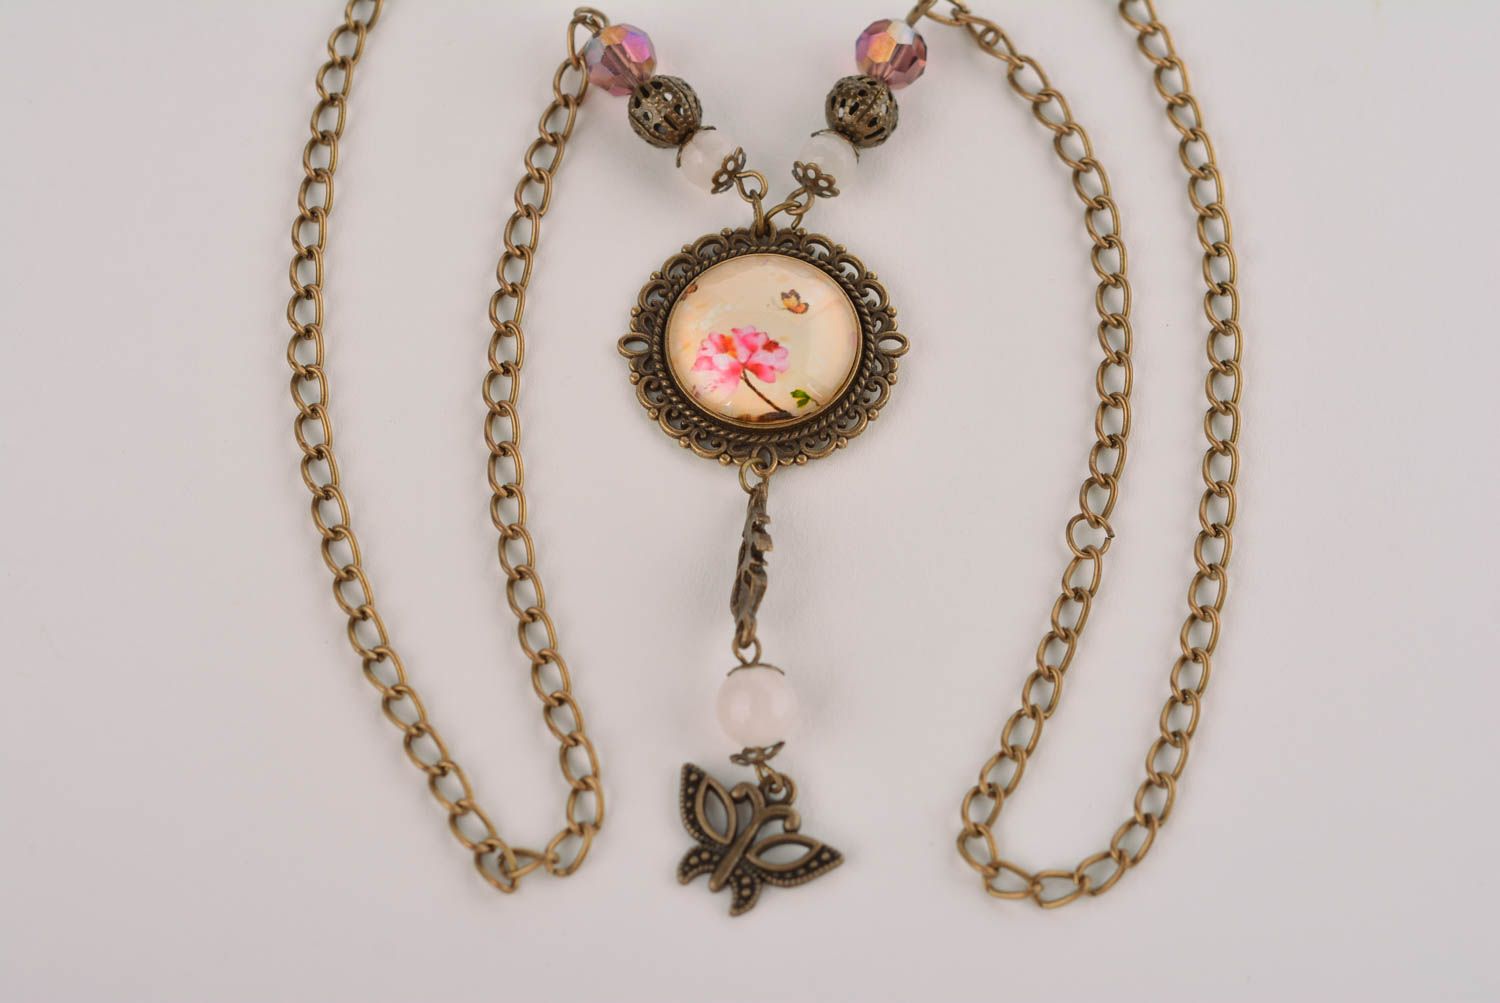 Unusual handmade glass pendant metal necklace metal jewelry designs gift ideas photo 3